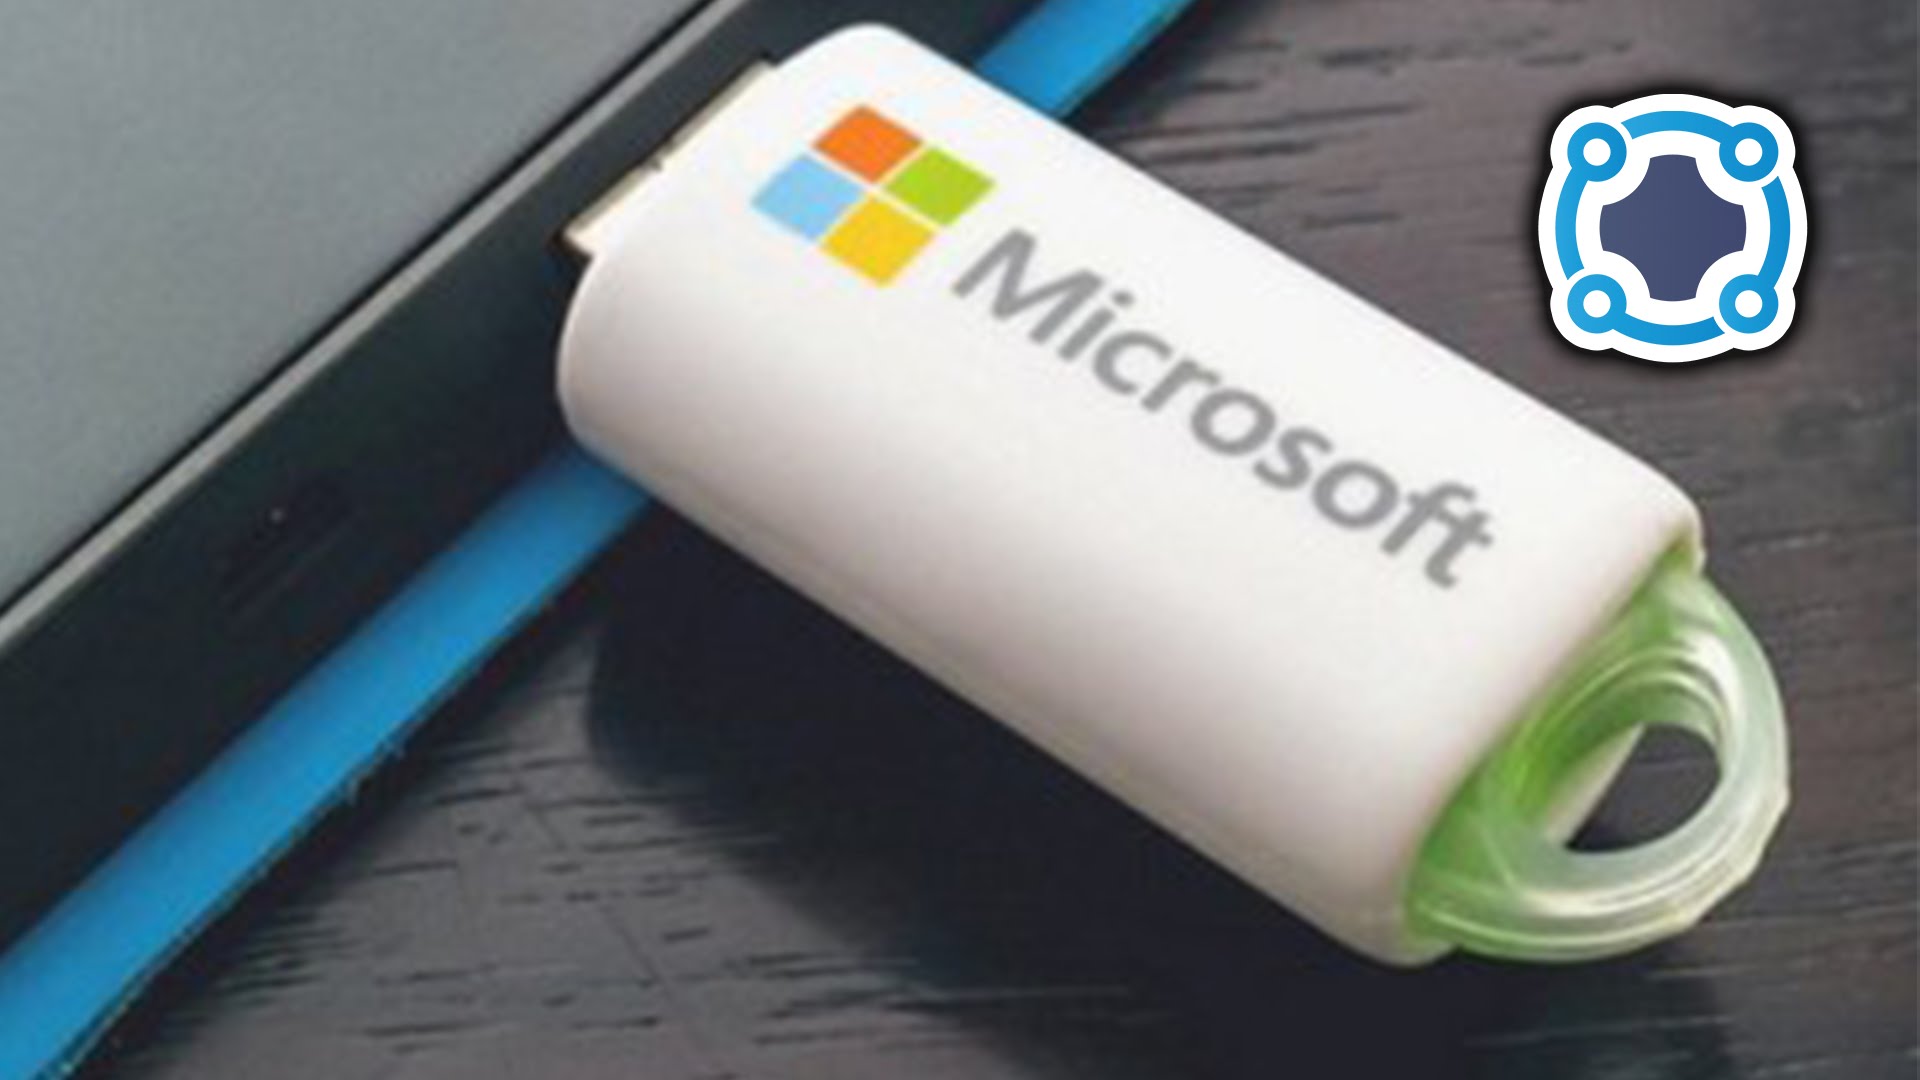 Windows 10 Will Come On USB Sticks